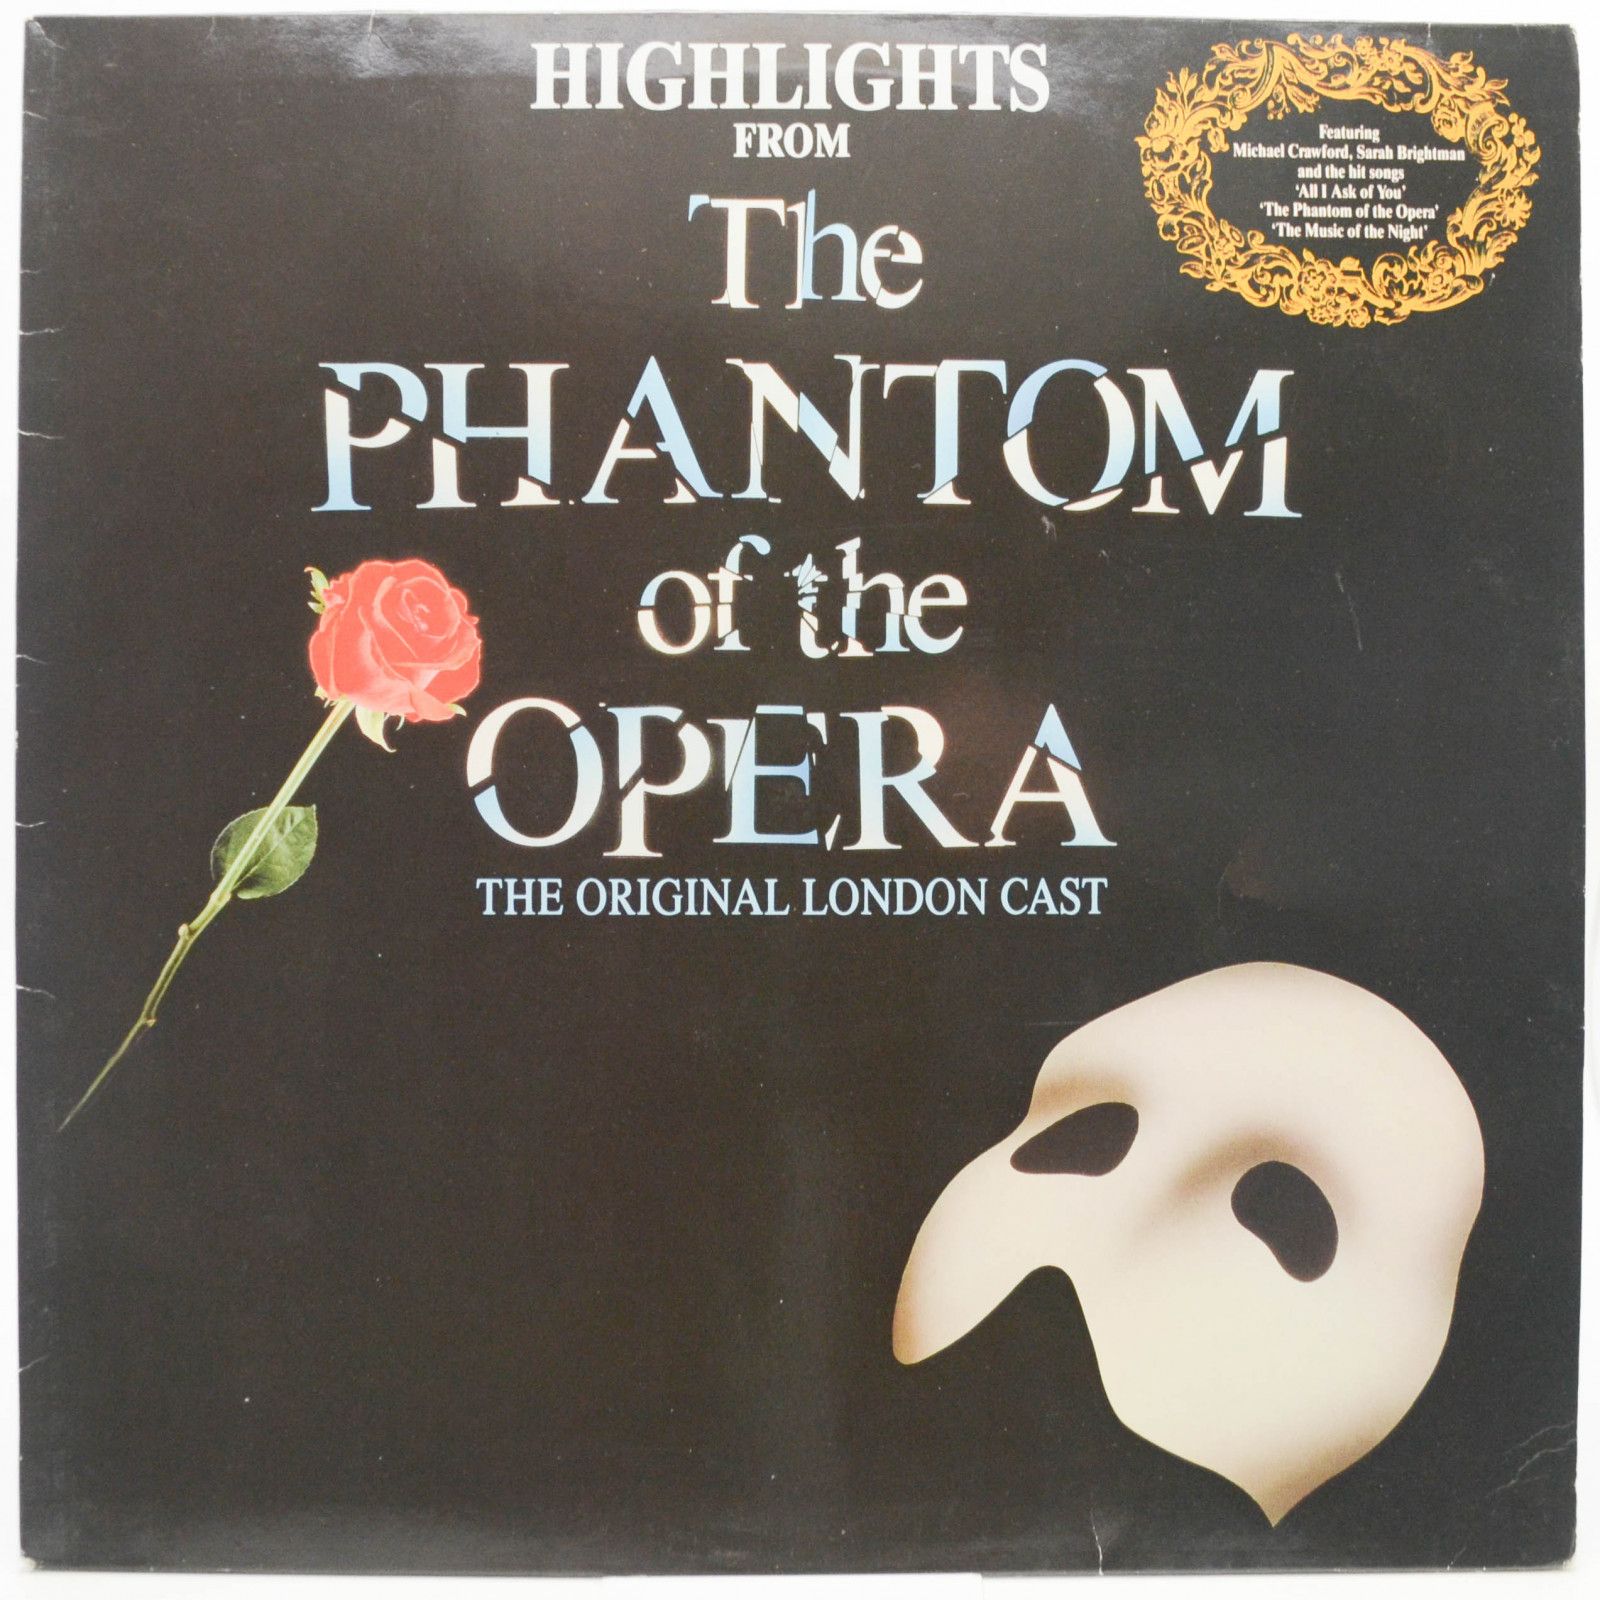 Andrew Lloyd Webber, The Original London Cast — Highlights From The Phantom Of The Opera, 1987